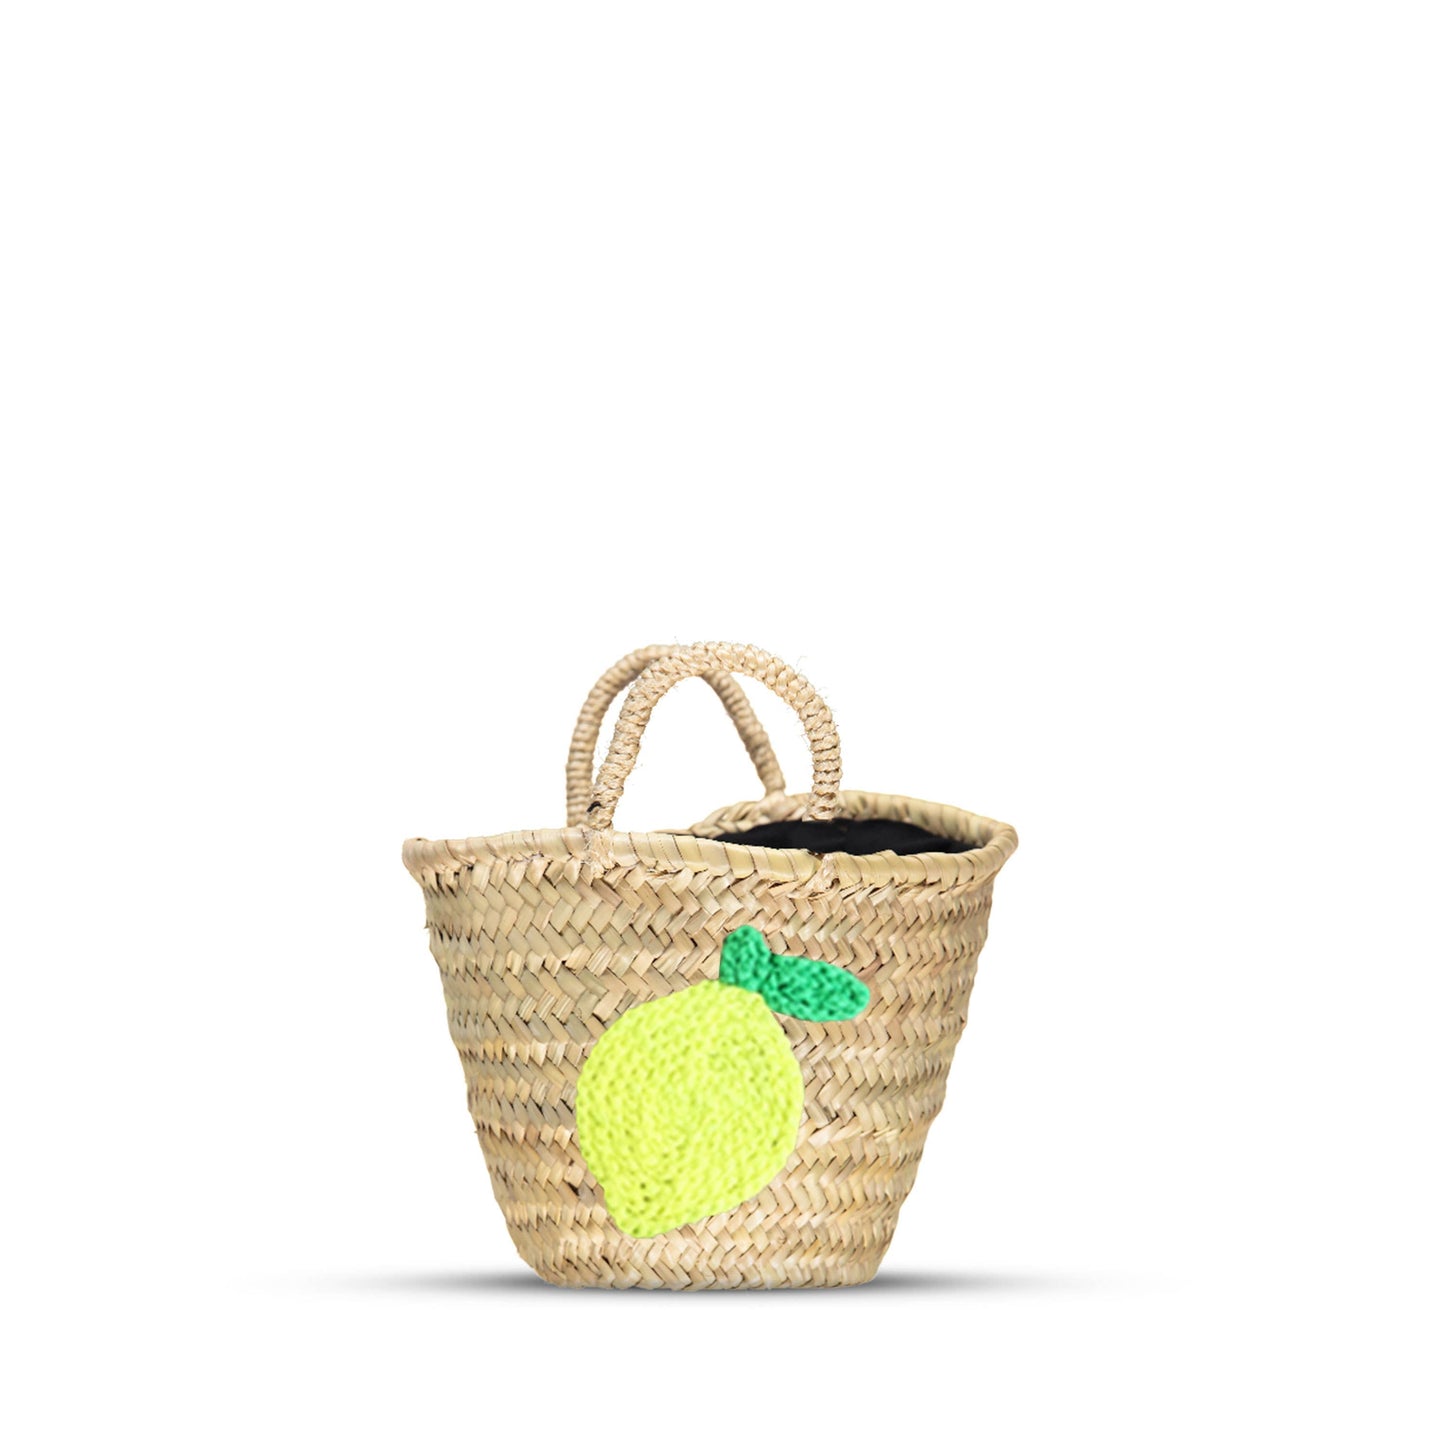 "When Life Gives You Lemons" Mini Straw Bag